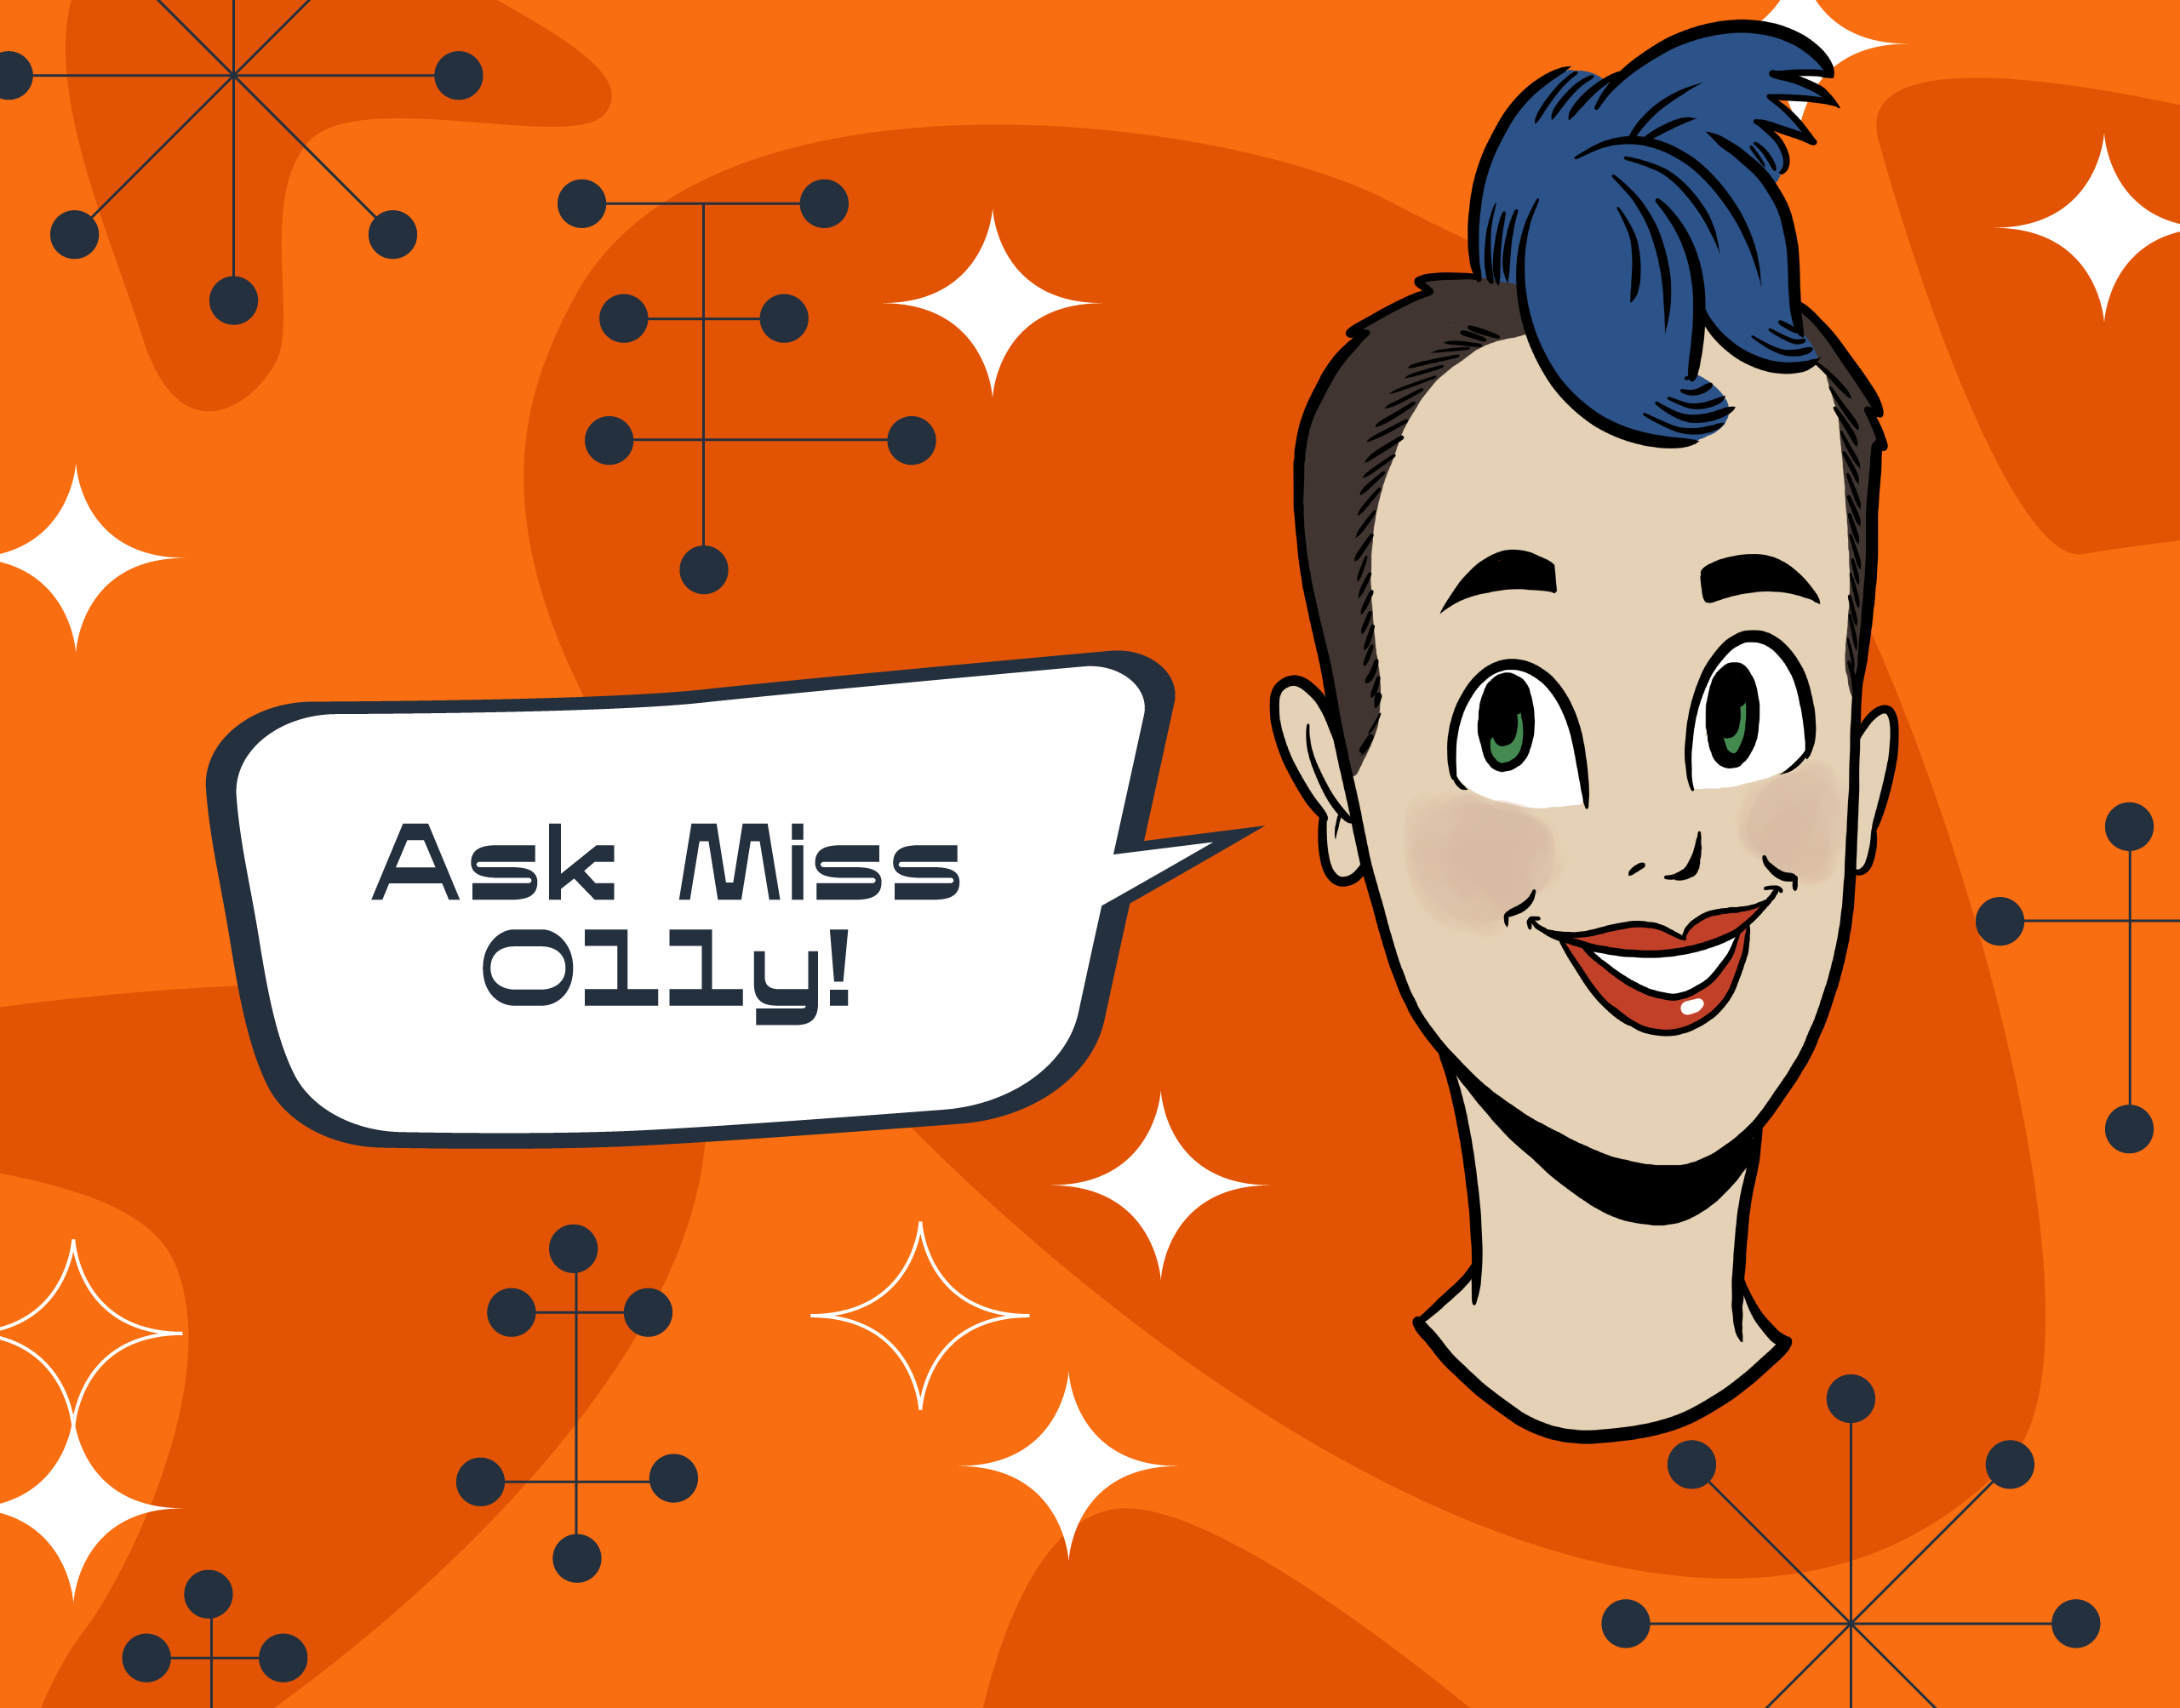 Ask Miss O11y